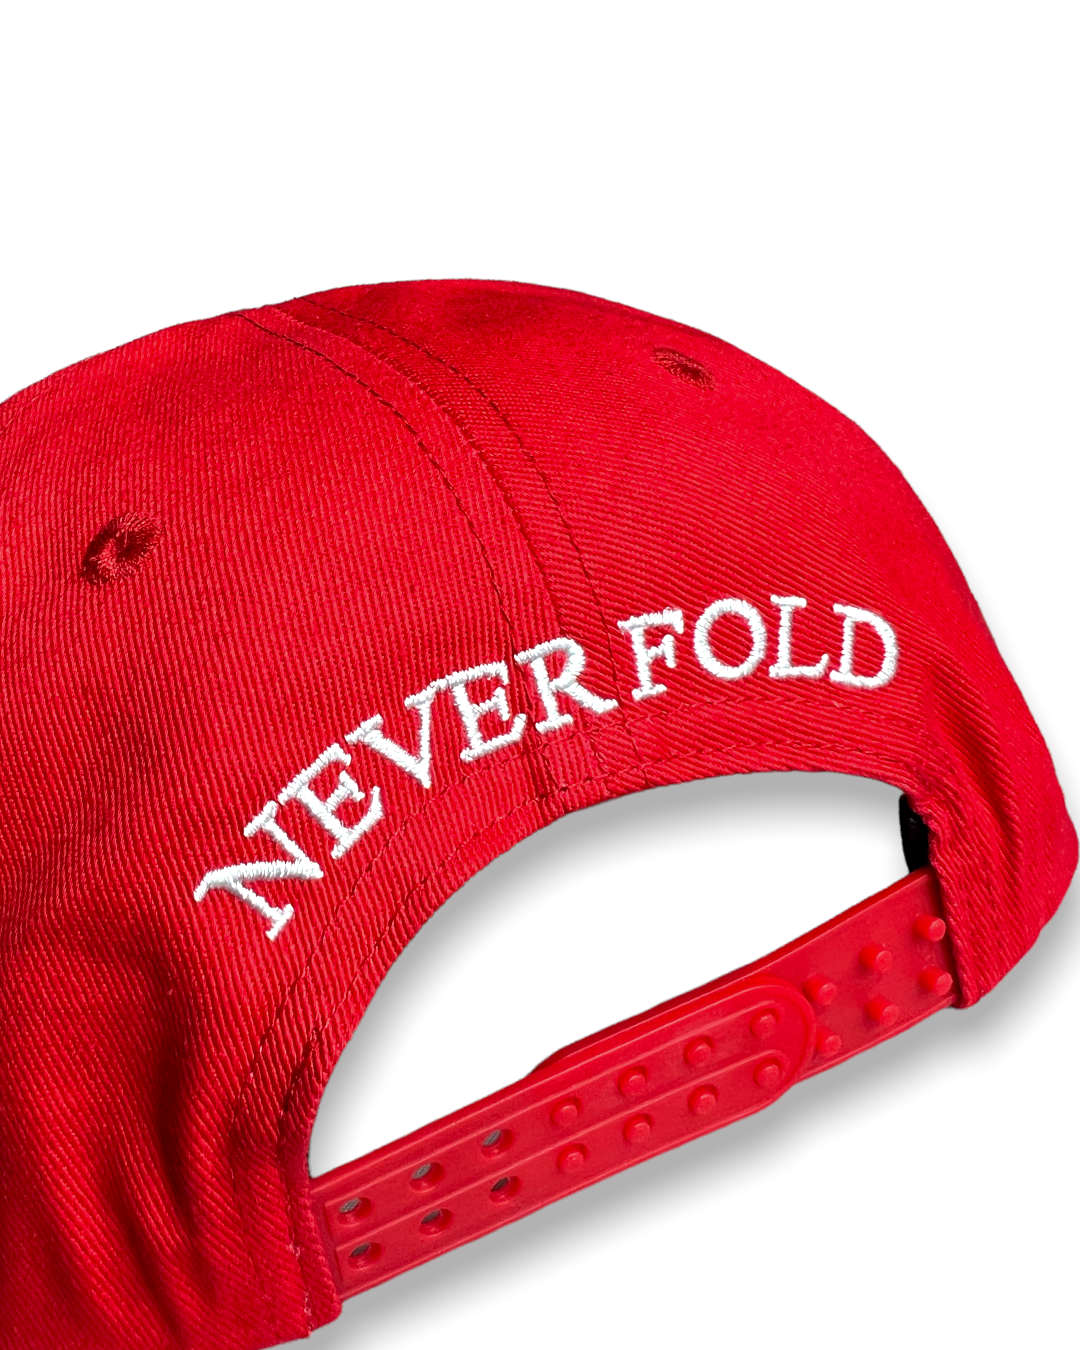 Never Fold Uk Streetwear Red Cap